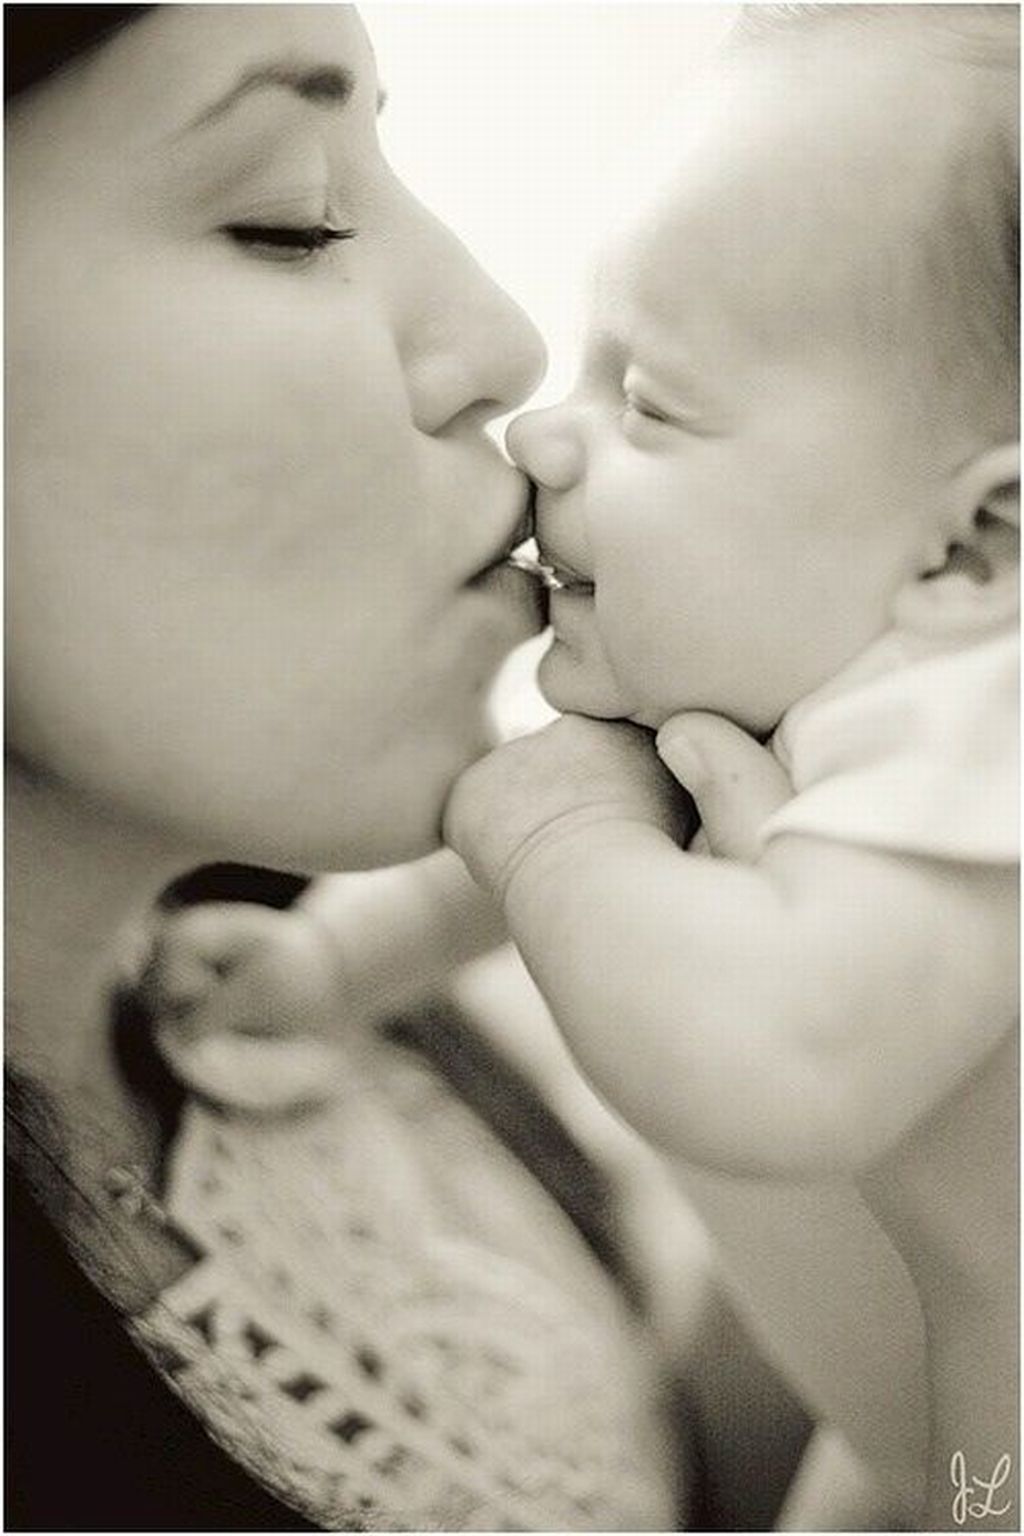 Мама поцелую морщинки. Поцелуй матери. Ребенок целует. Мама целует младенца. Детский поцелуй.